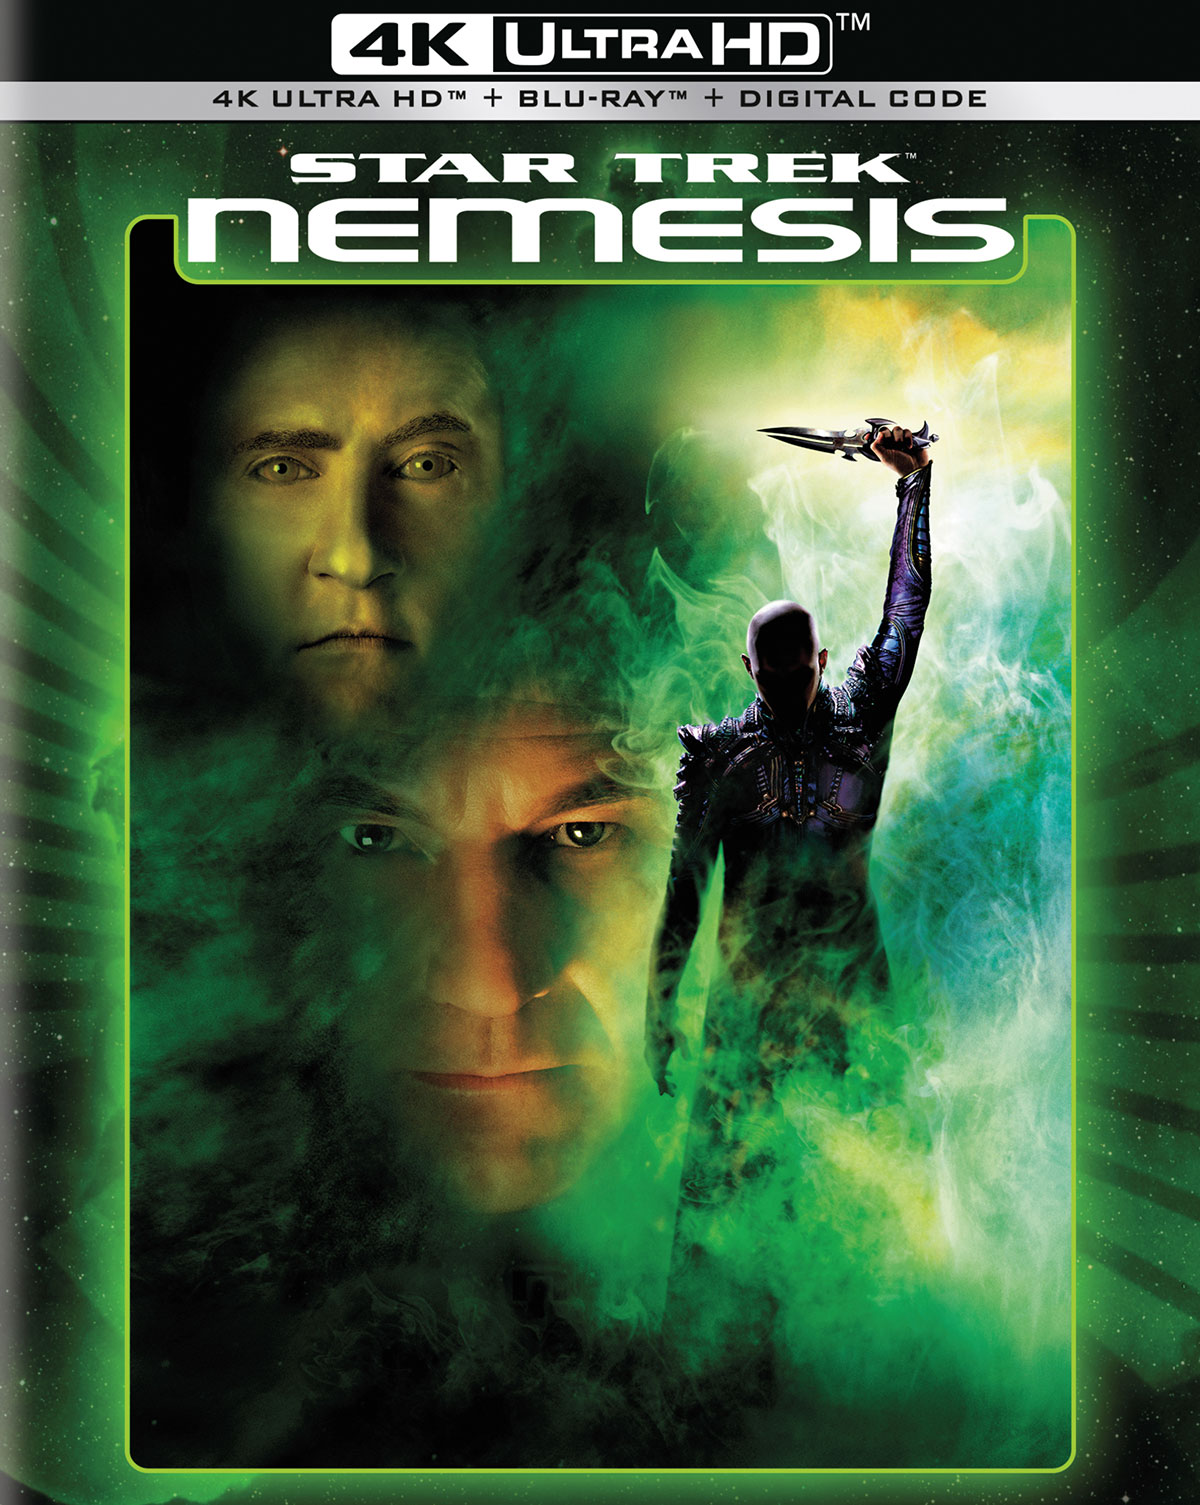 Star Trek: Nemesis 4K Ultra HD cover art